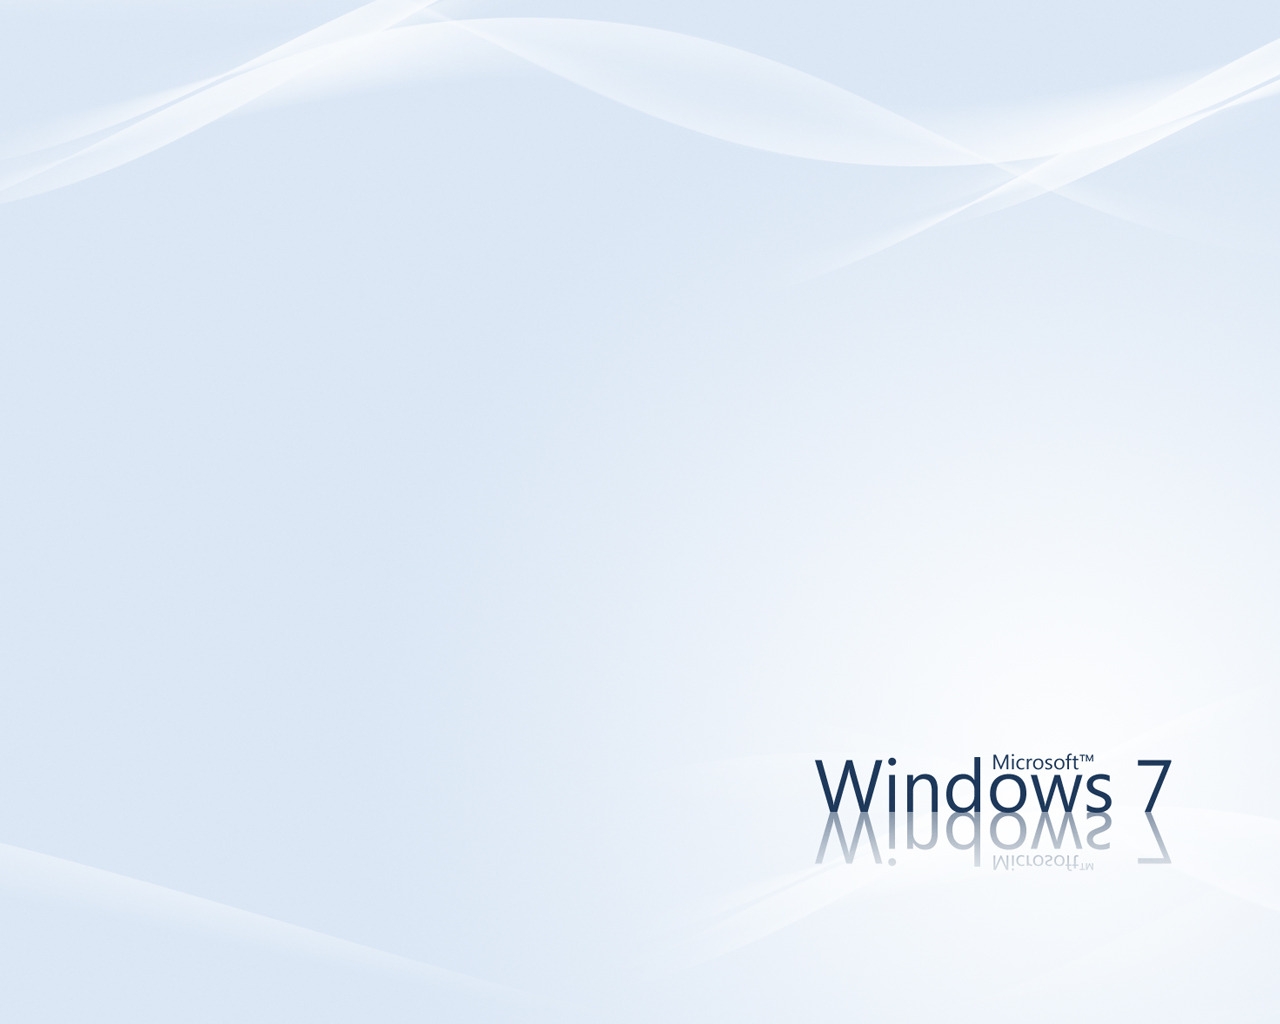 Windows 7 Bright for 1280 x 1024 resolution